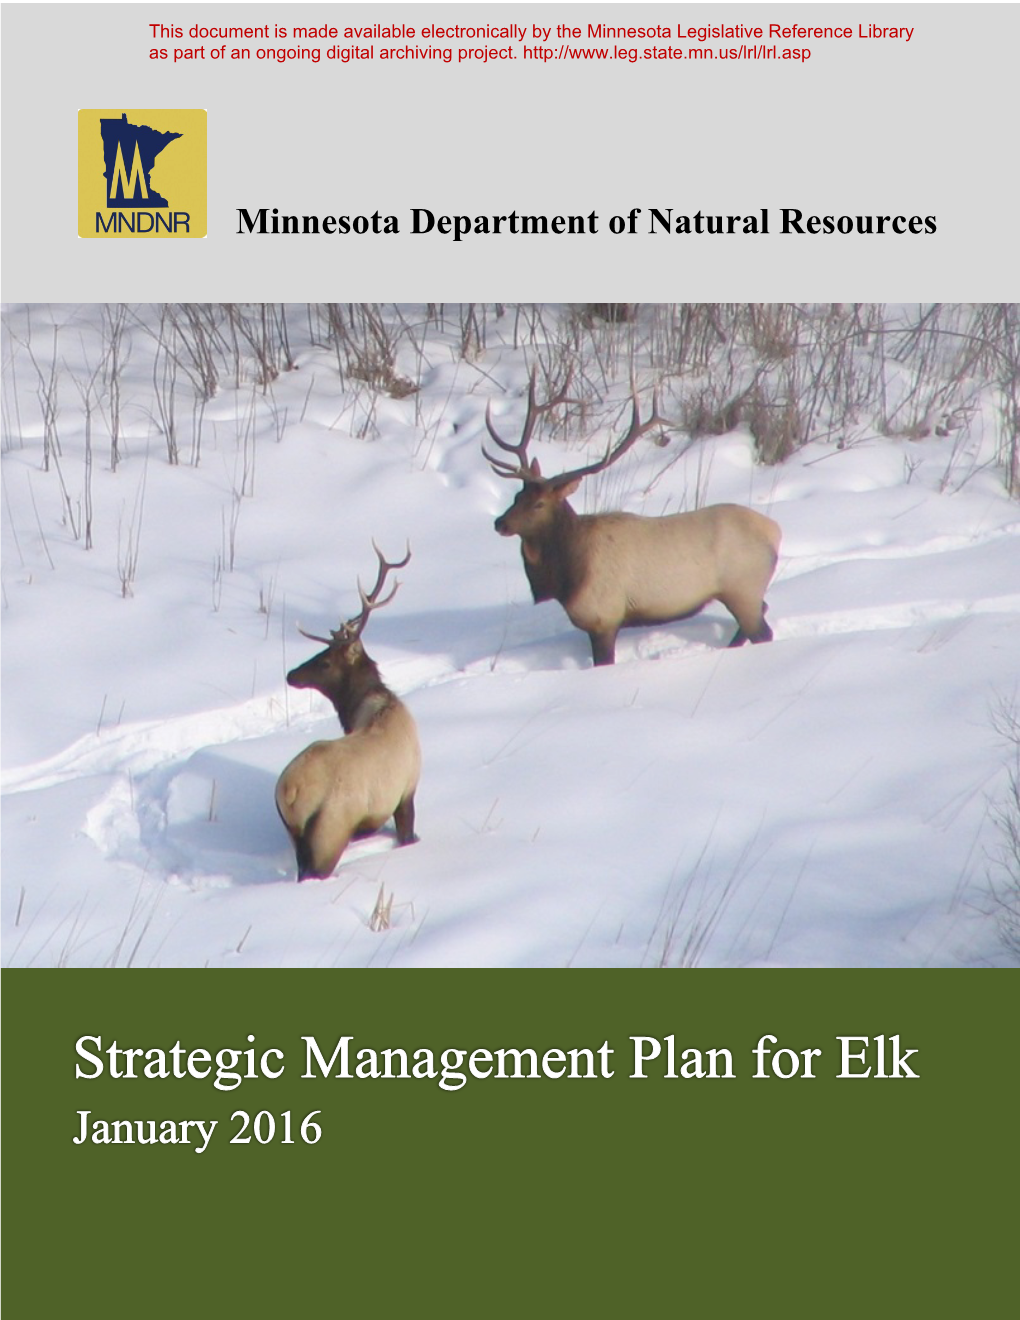 Strategic Elk Management Plan 2016